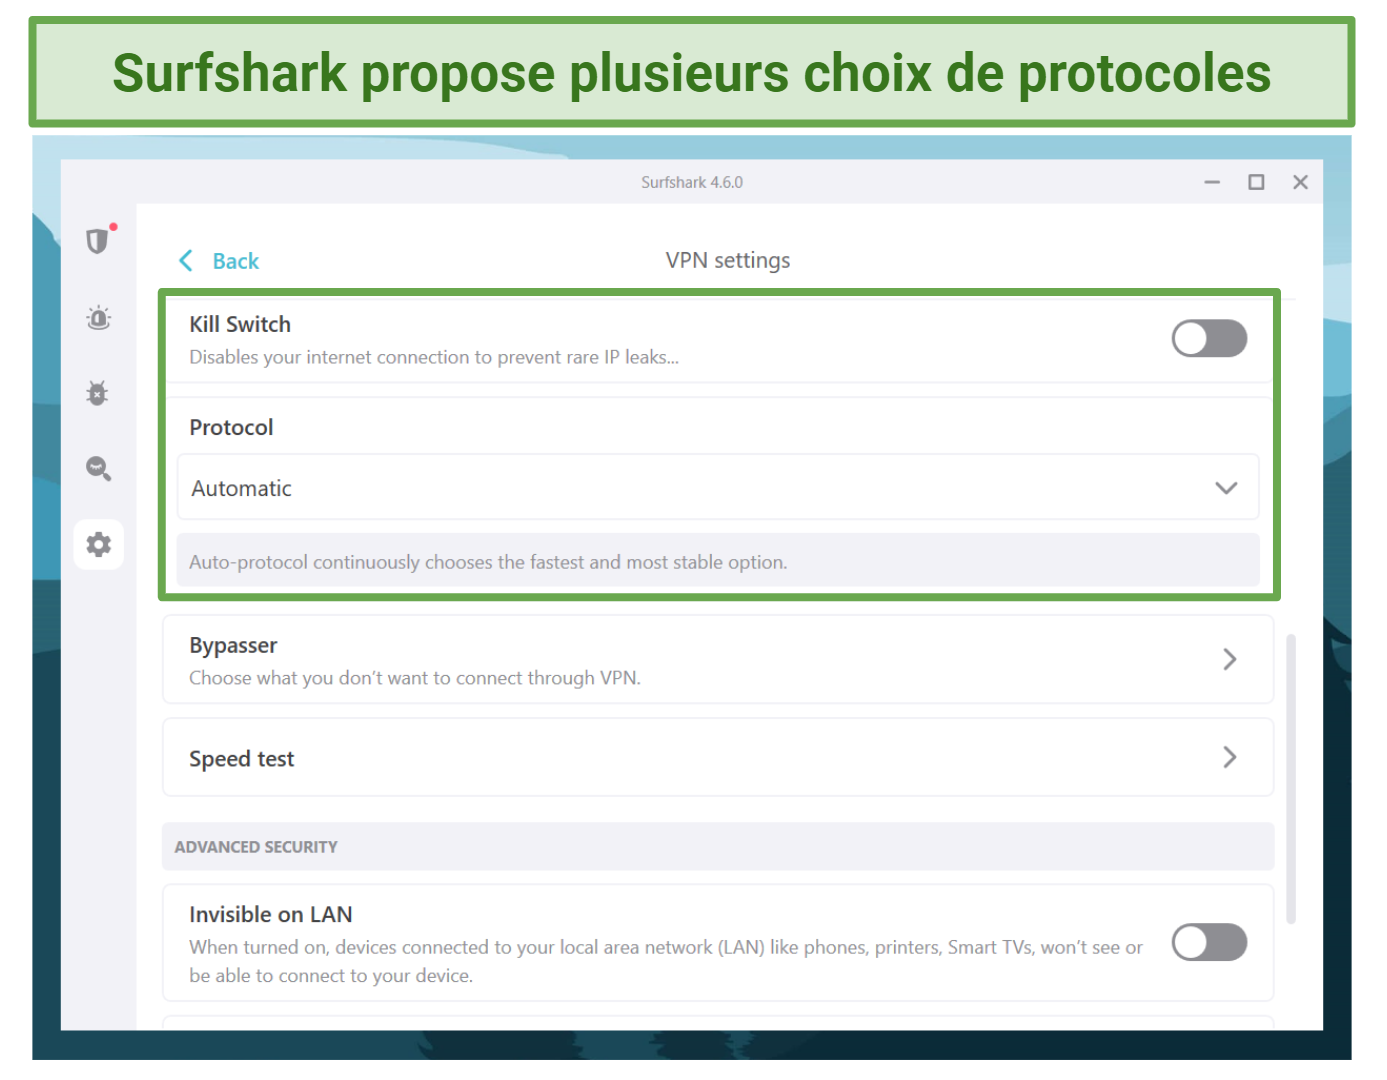 Screenshot of Surfshark's Windows app